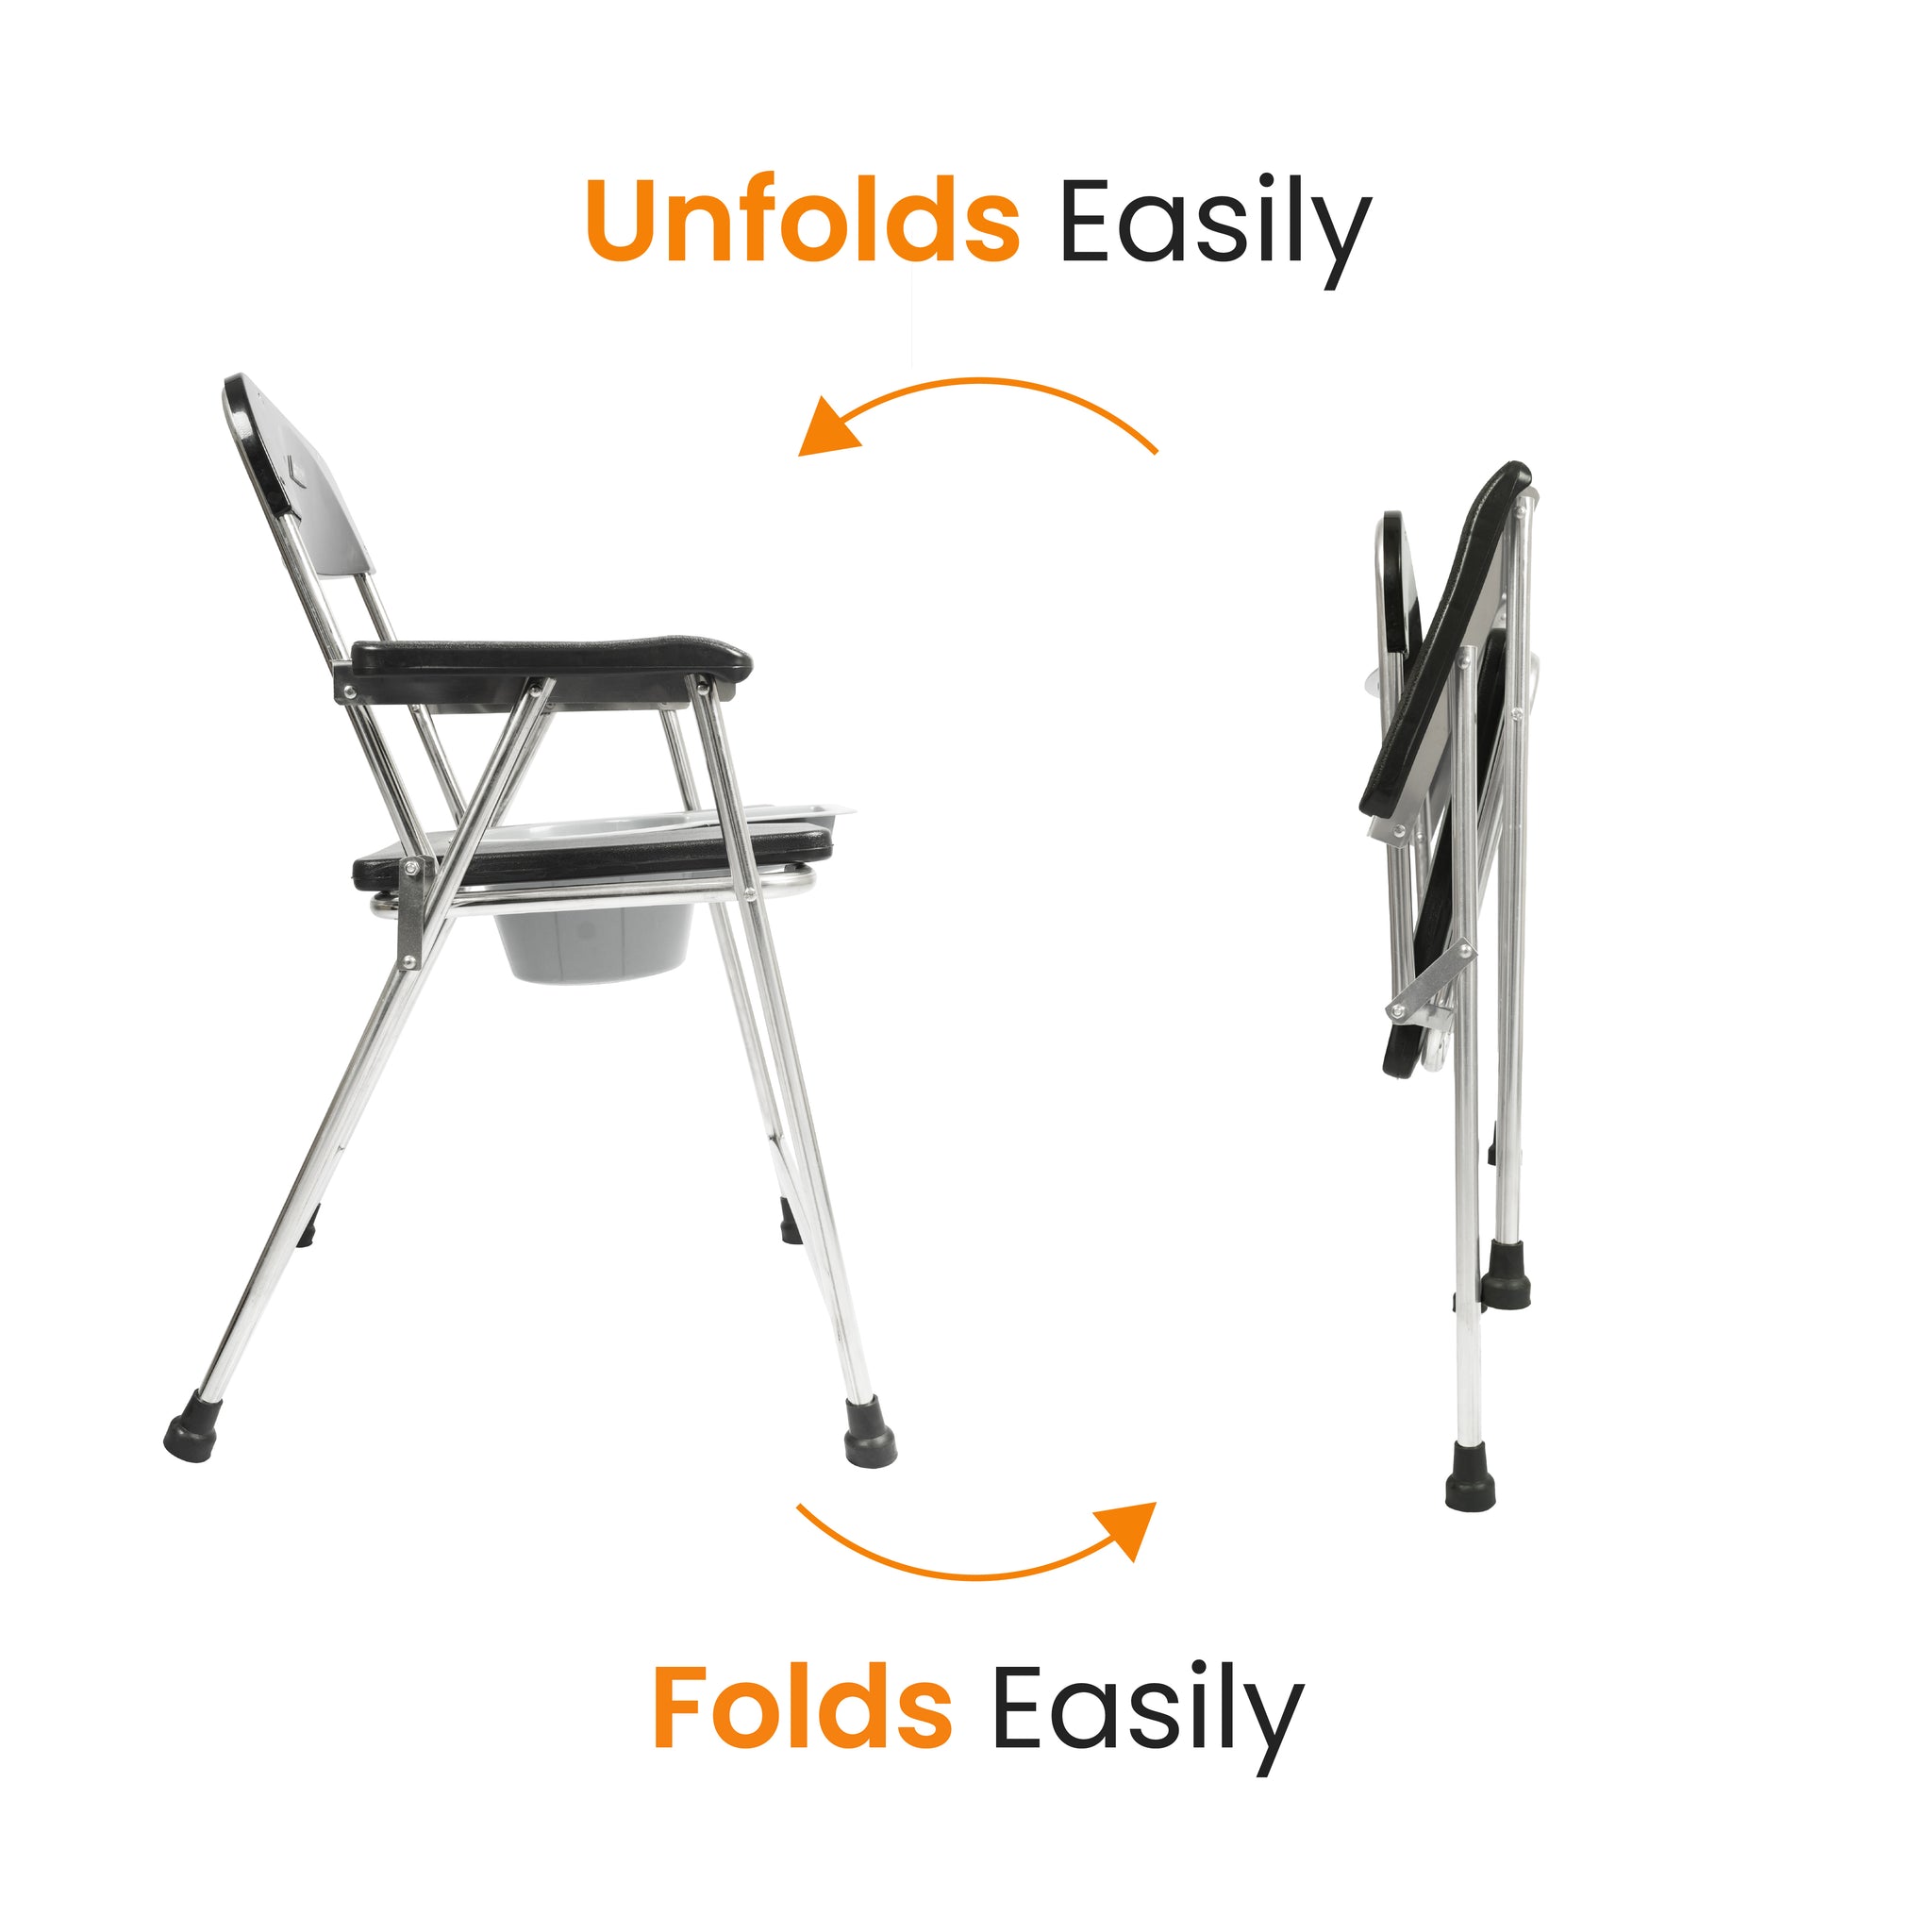 Arcatron Foldable Anti-Slip Shower Commode Chair